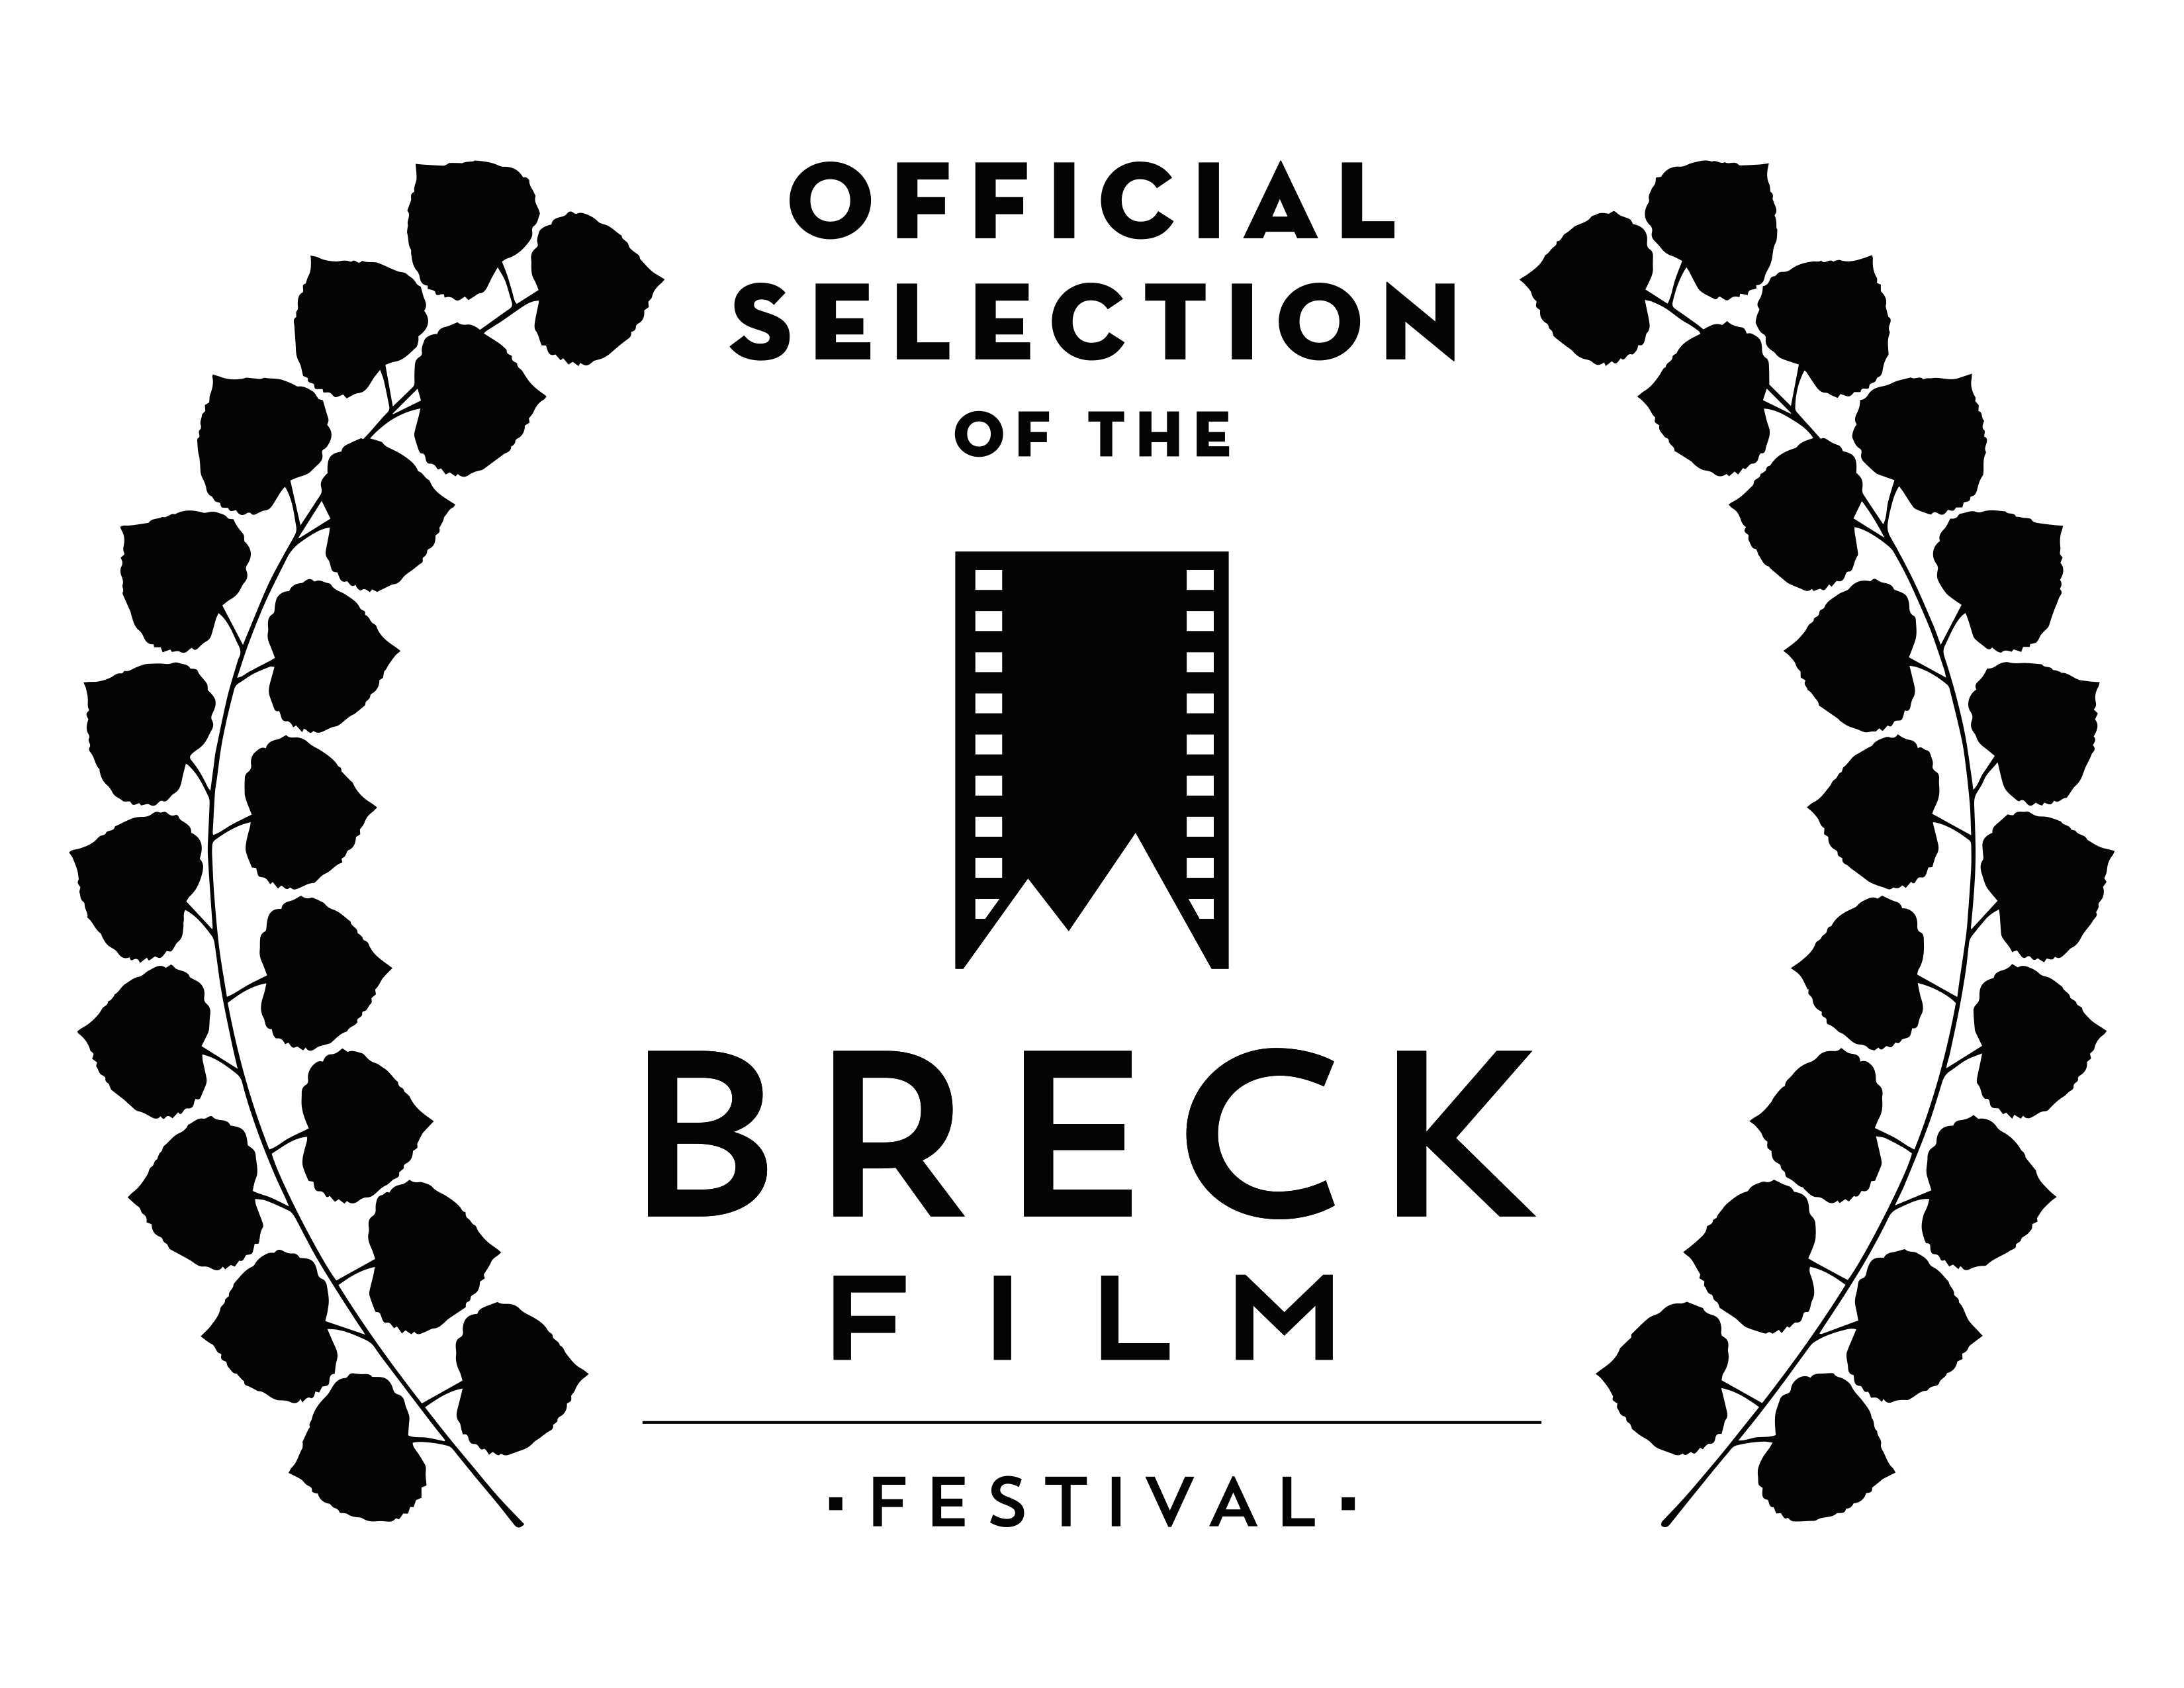 Official Breckenridge Film Festival 2020 selection